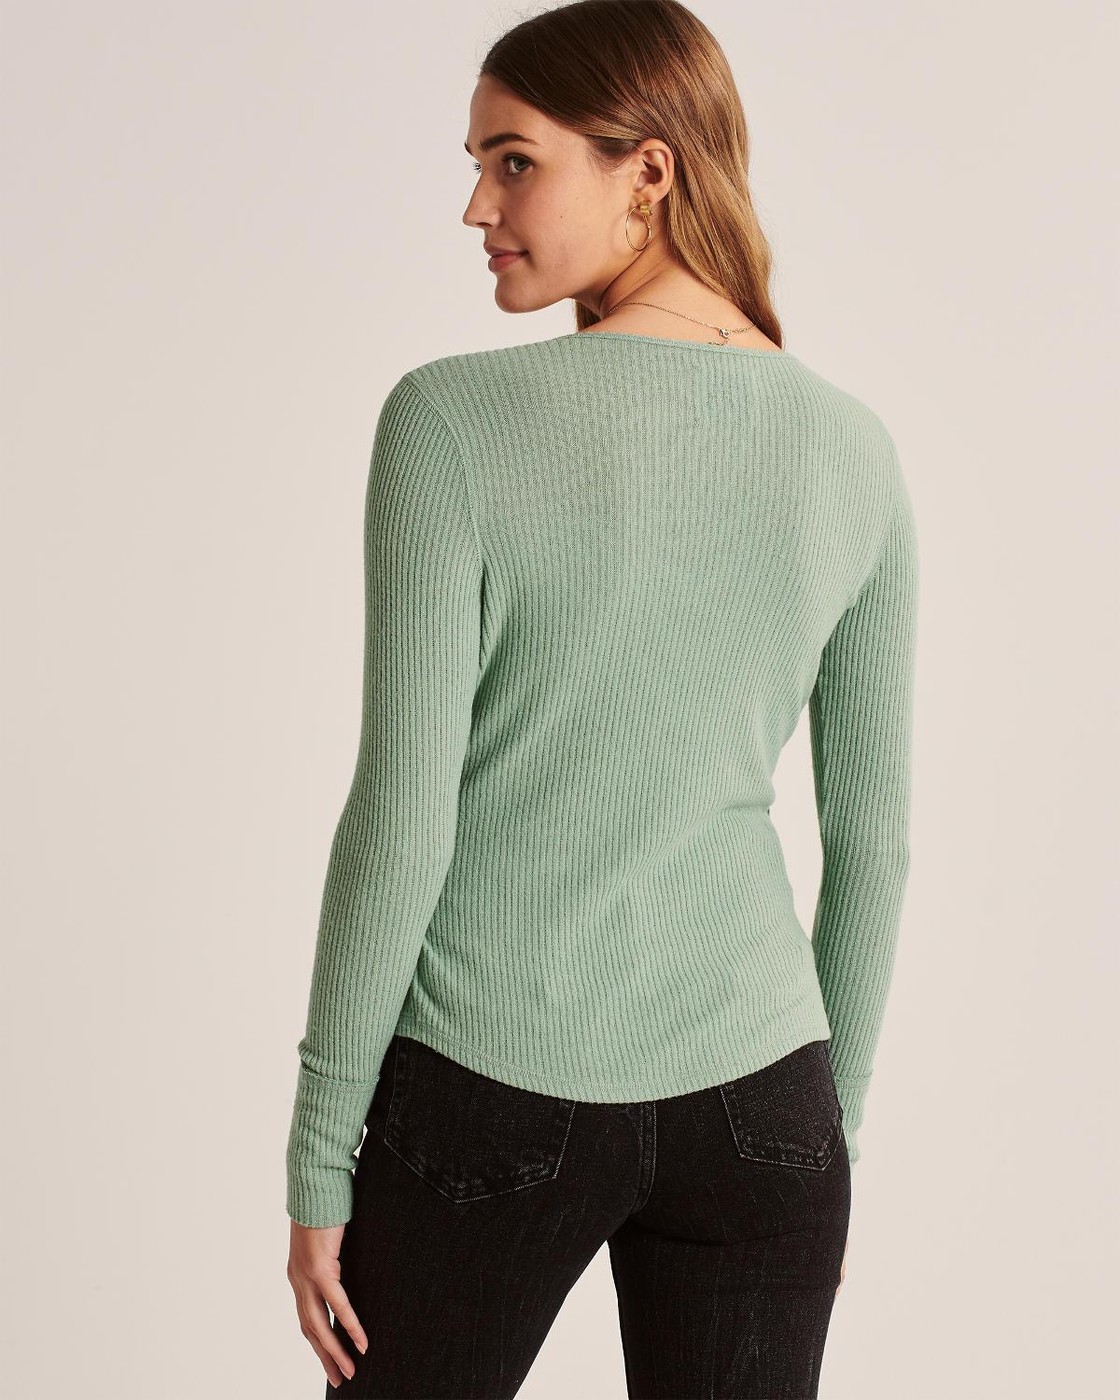 Пуловер Abercrombie & Fitch, S, S